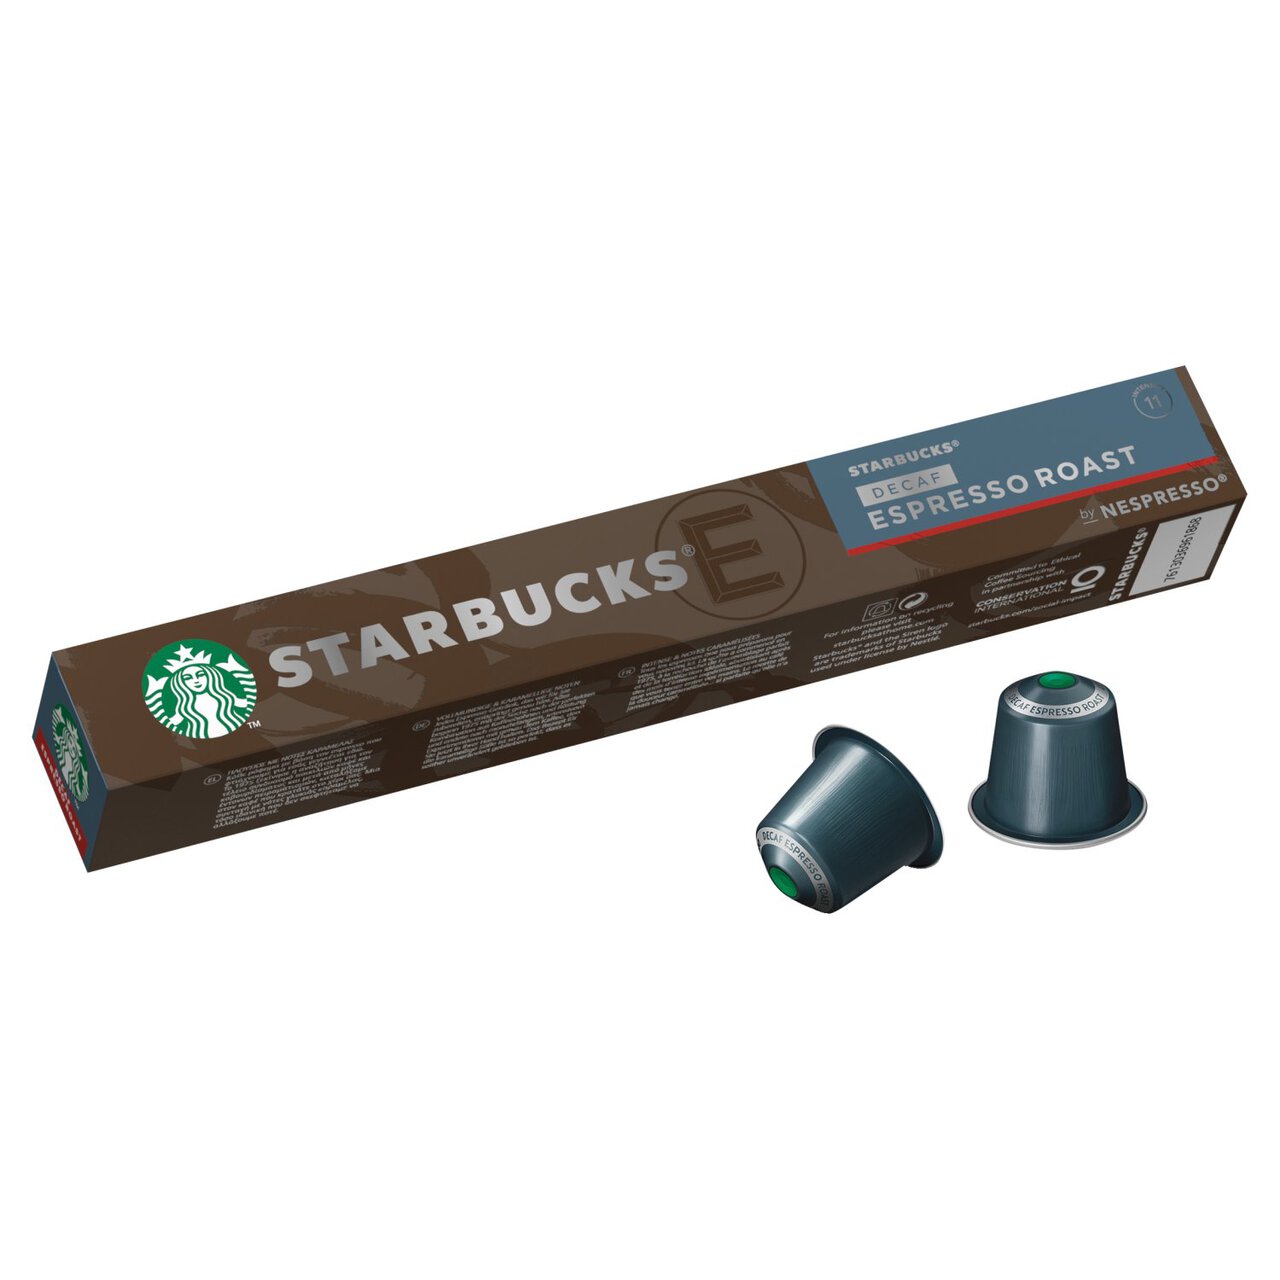 STARBUCKS by NESPRESSO Decaf Espresso Roast Coffee Pods 10 per pack